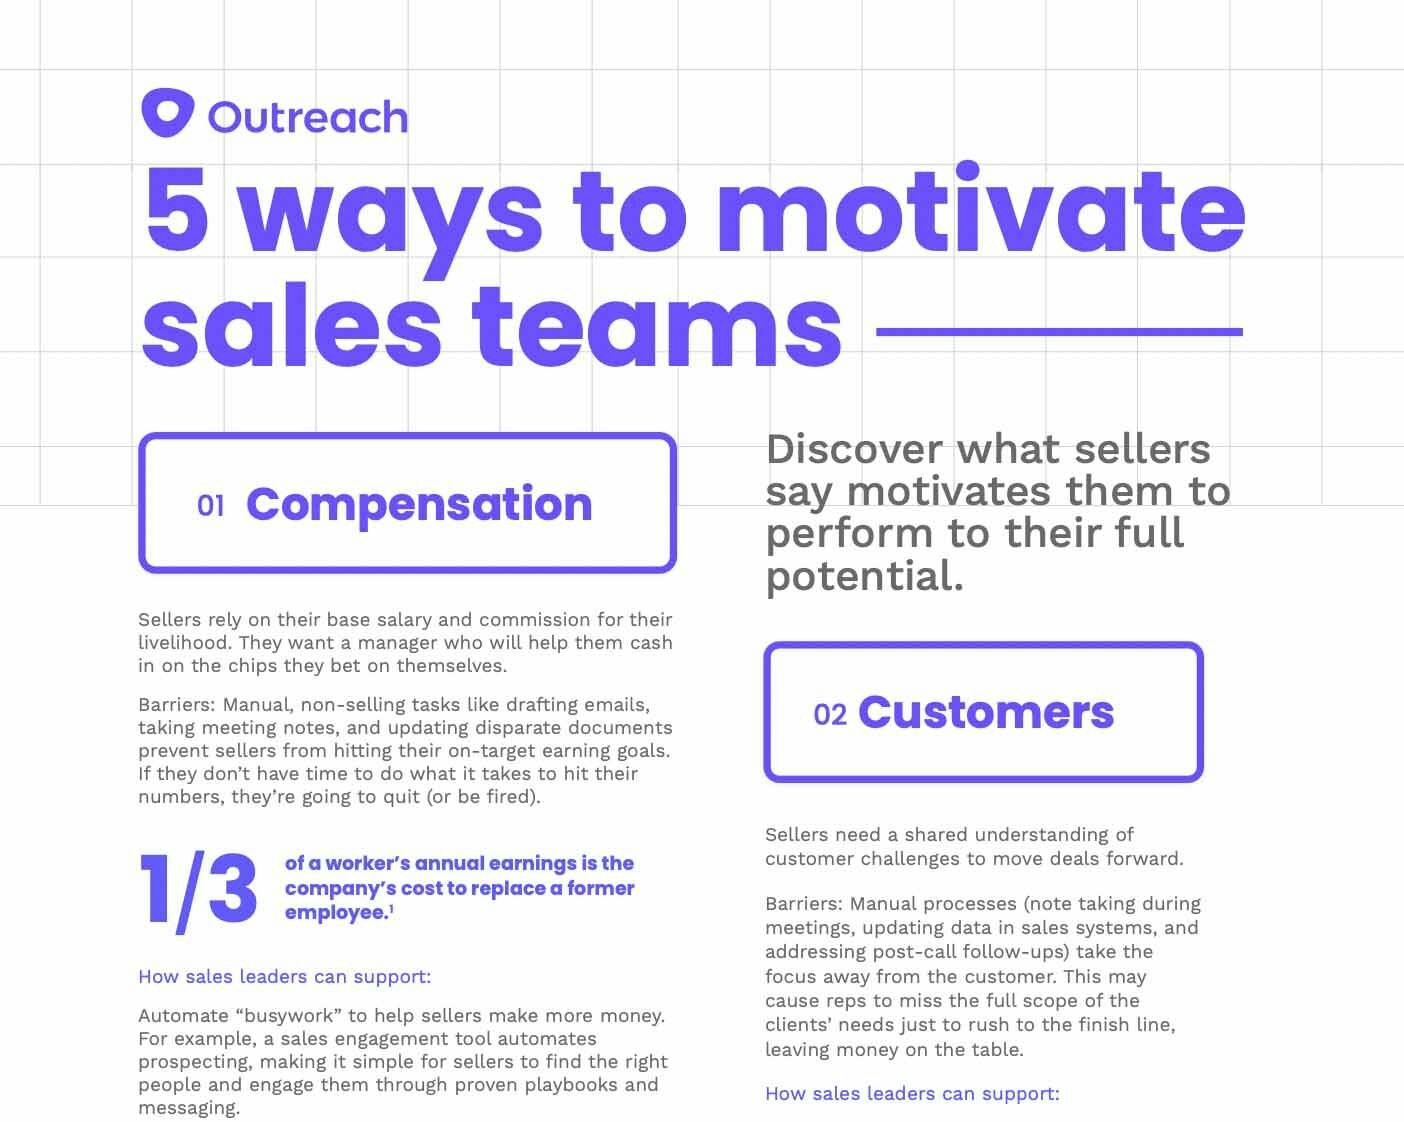 5 ways to motivate sales teams